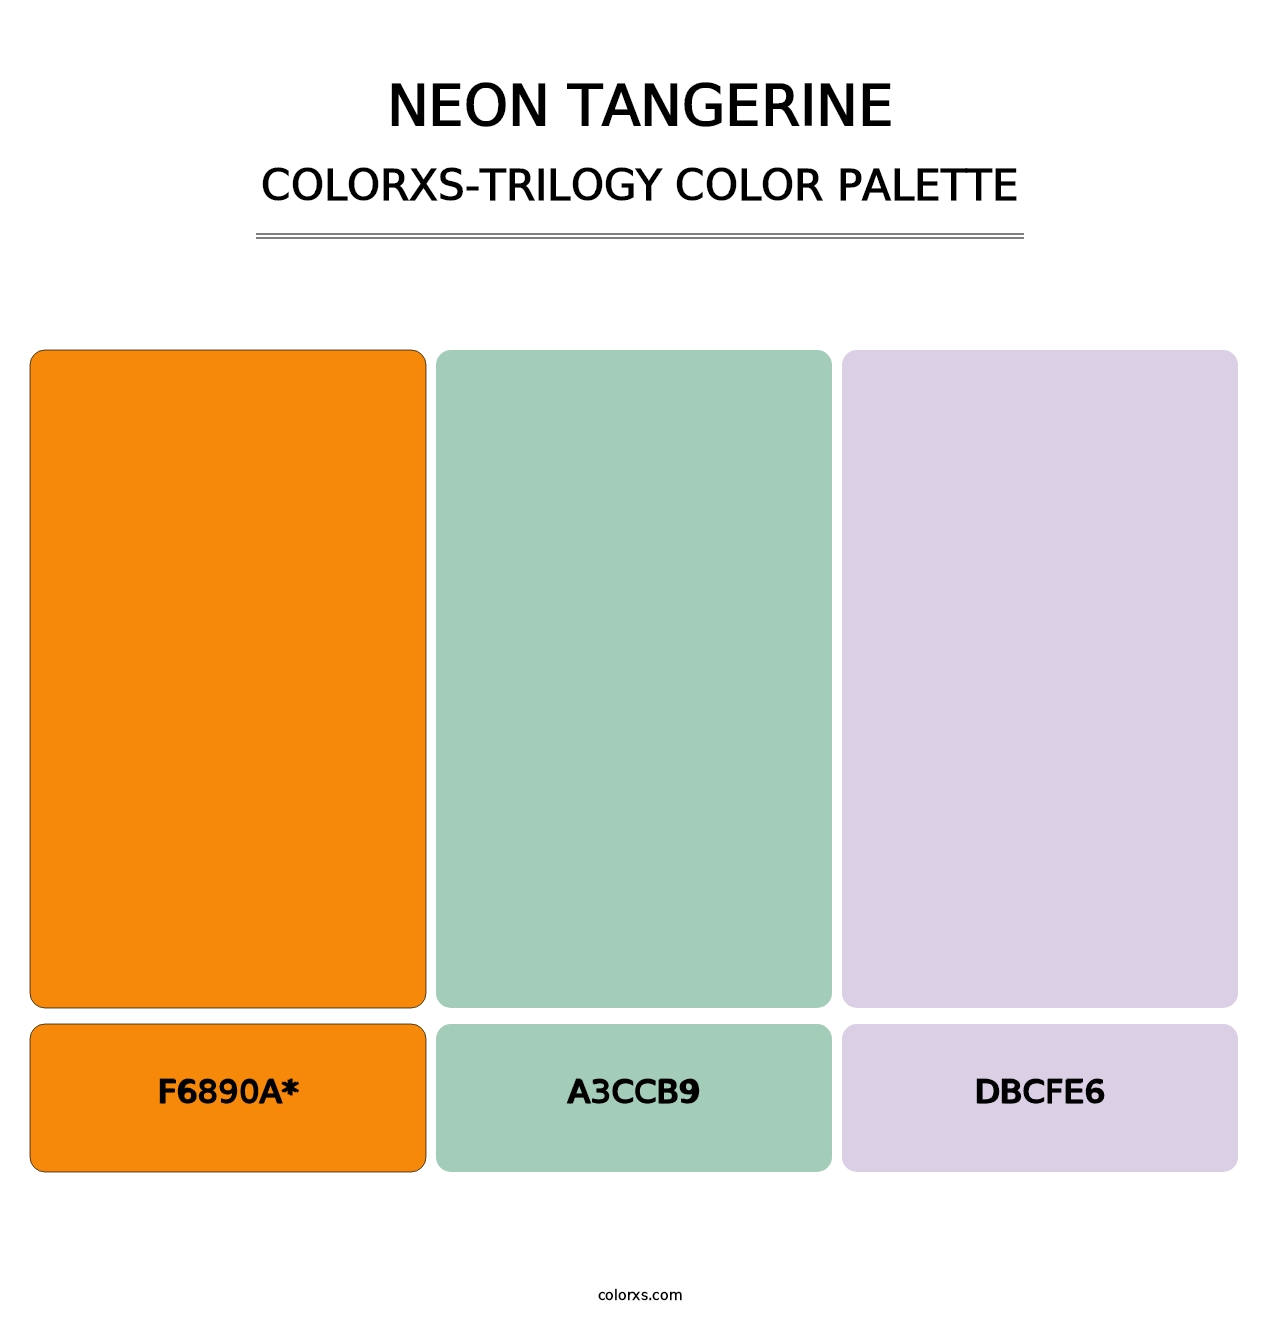 Neon Tangerine - Colorxs Trilogy Palette